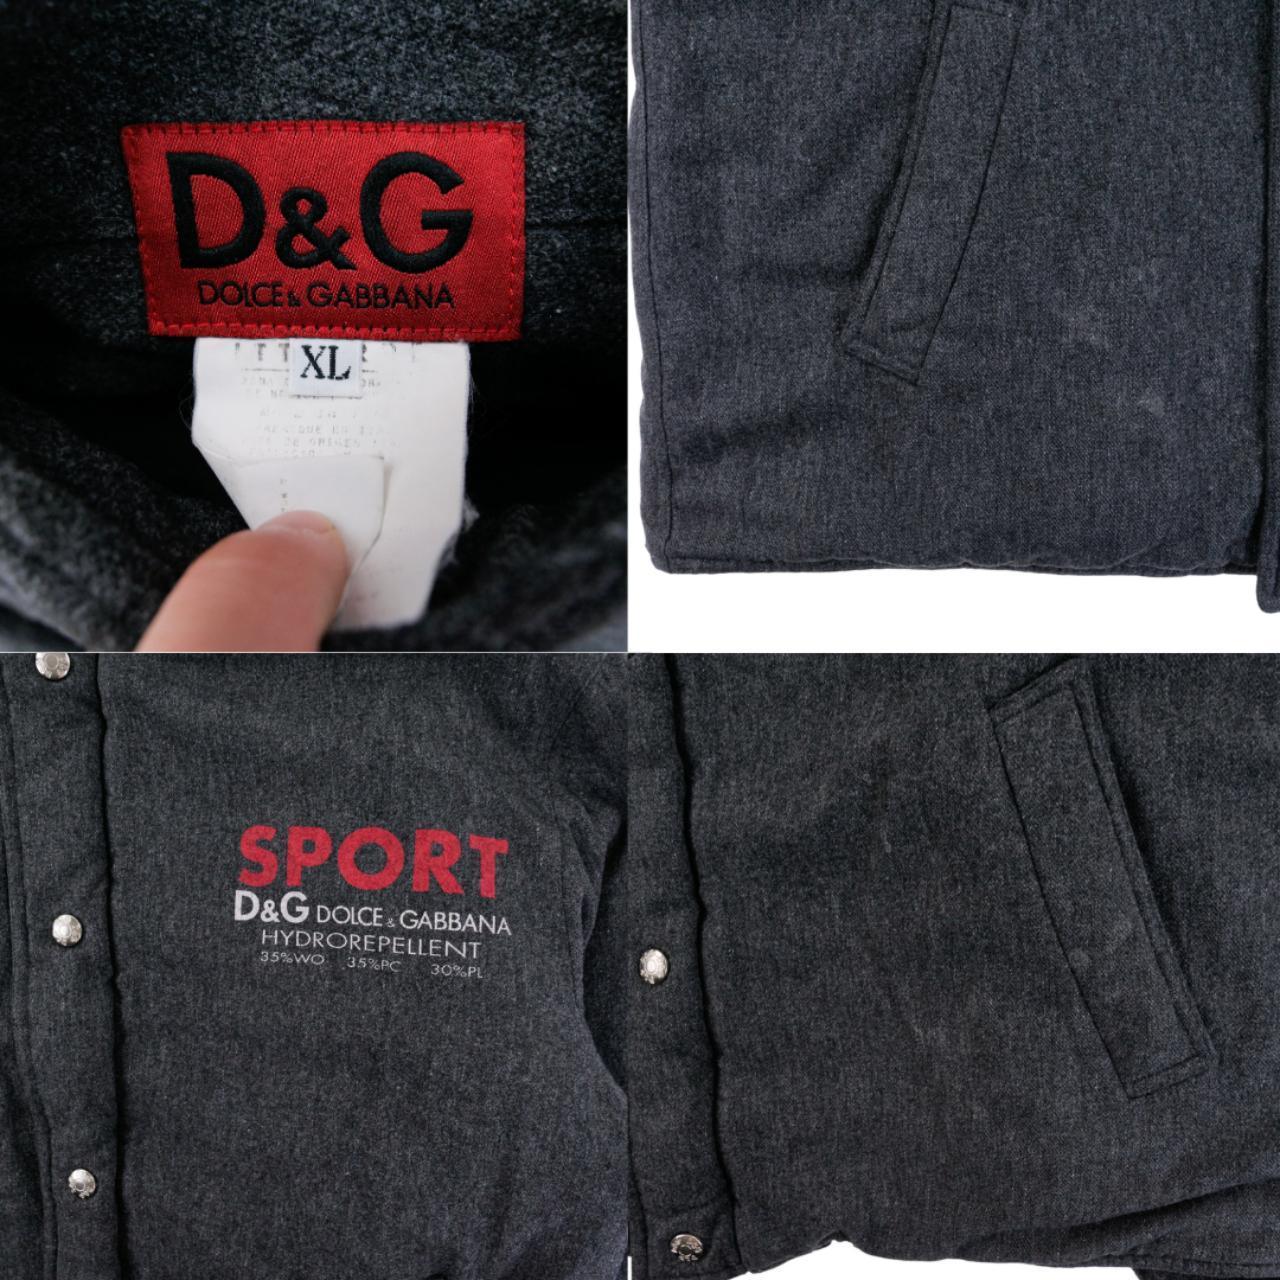 Vintage D&G Dolce & Gabbana Sport Reversible Jacket Size XL - Known Source